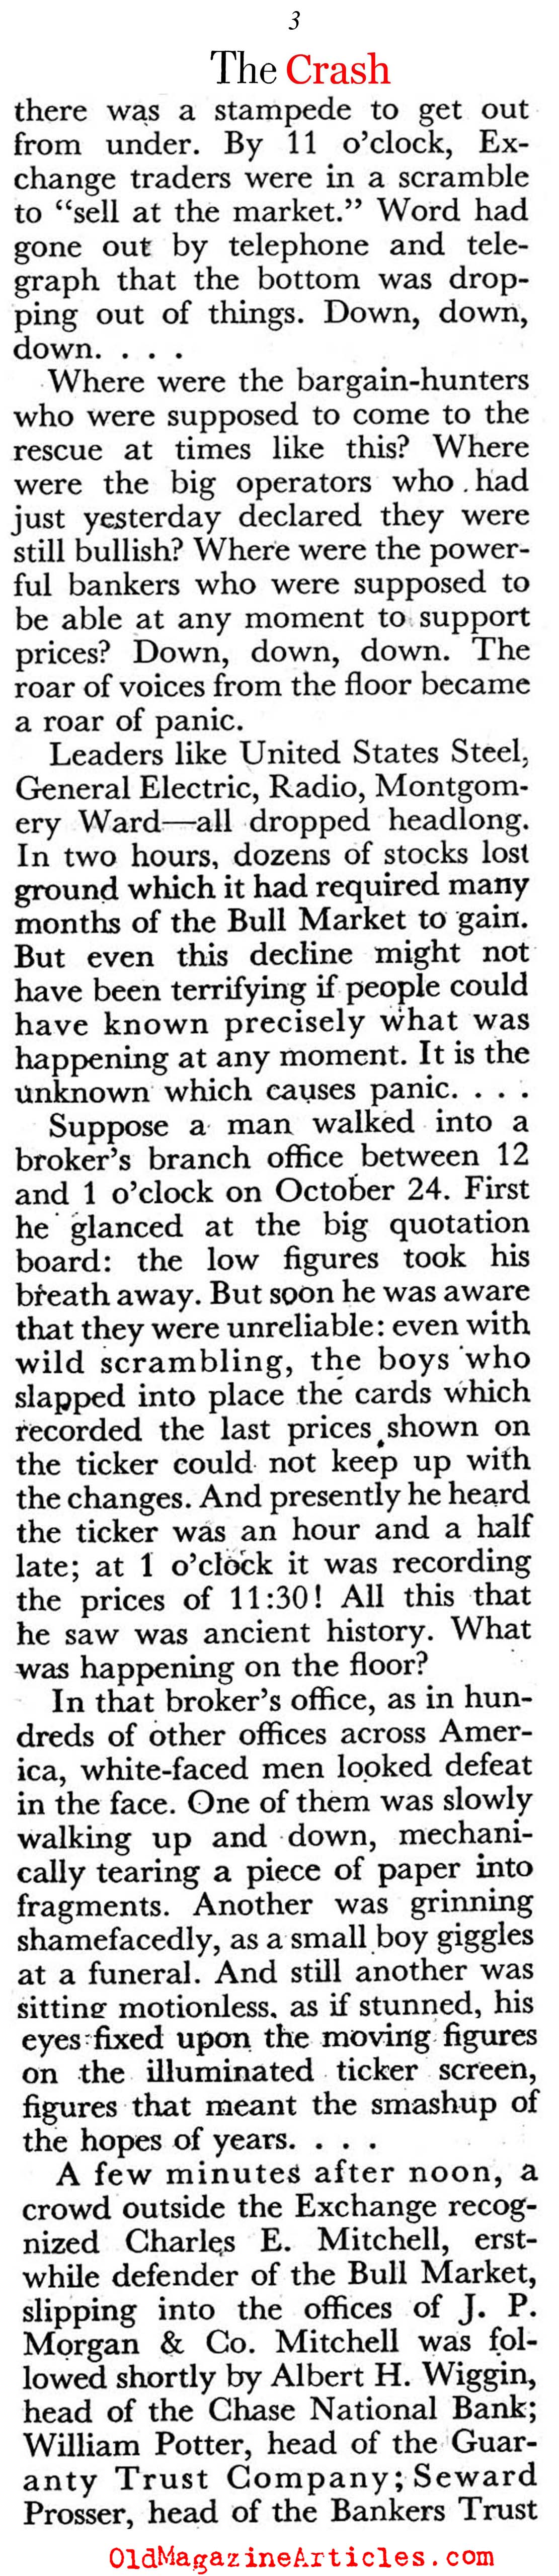 The Crash (Coronet Magazine, 1946)